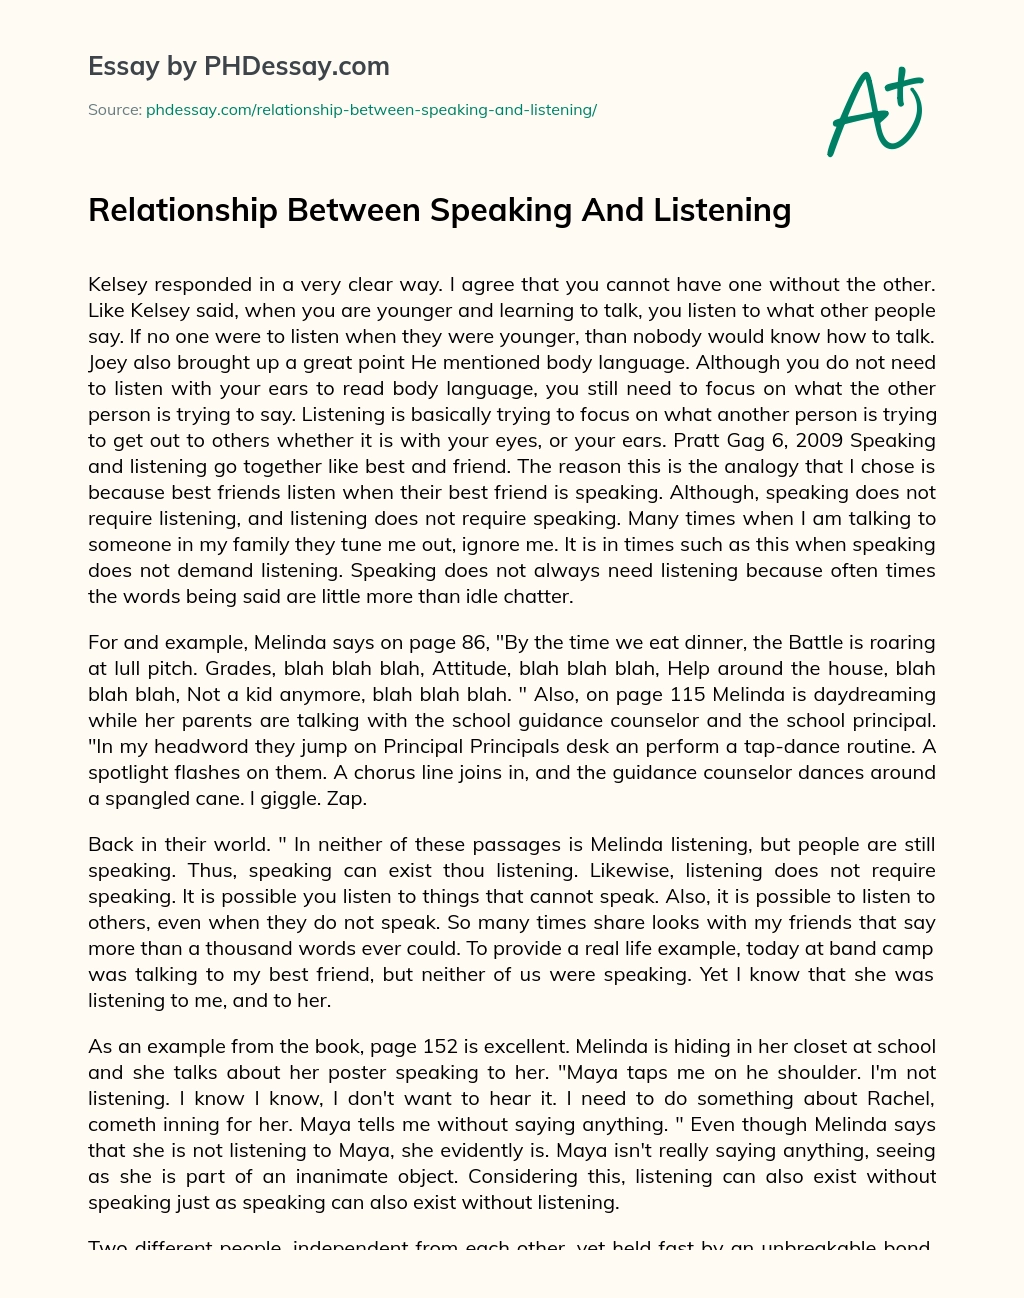 Relationship Between Speaking And Listening essay